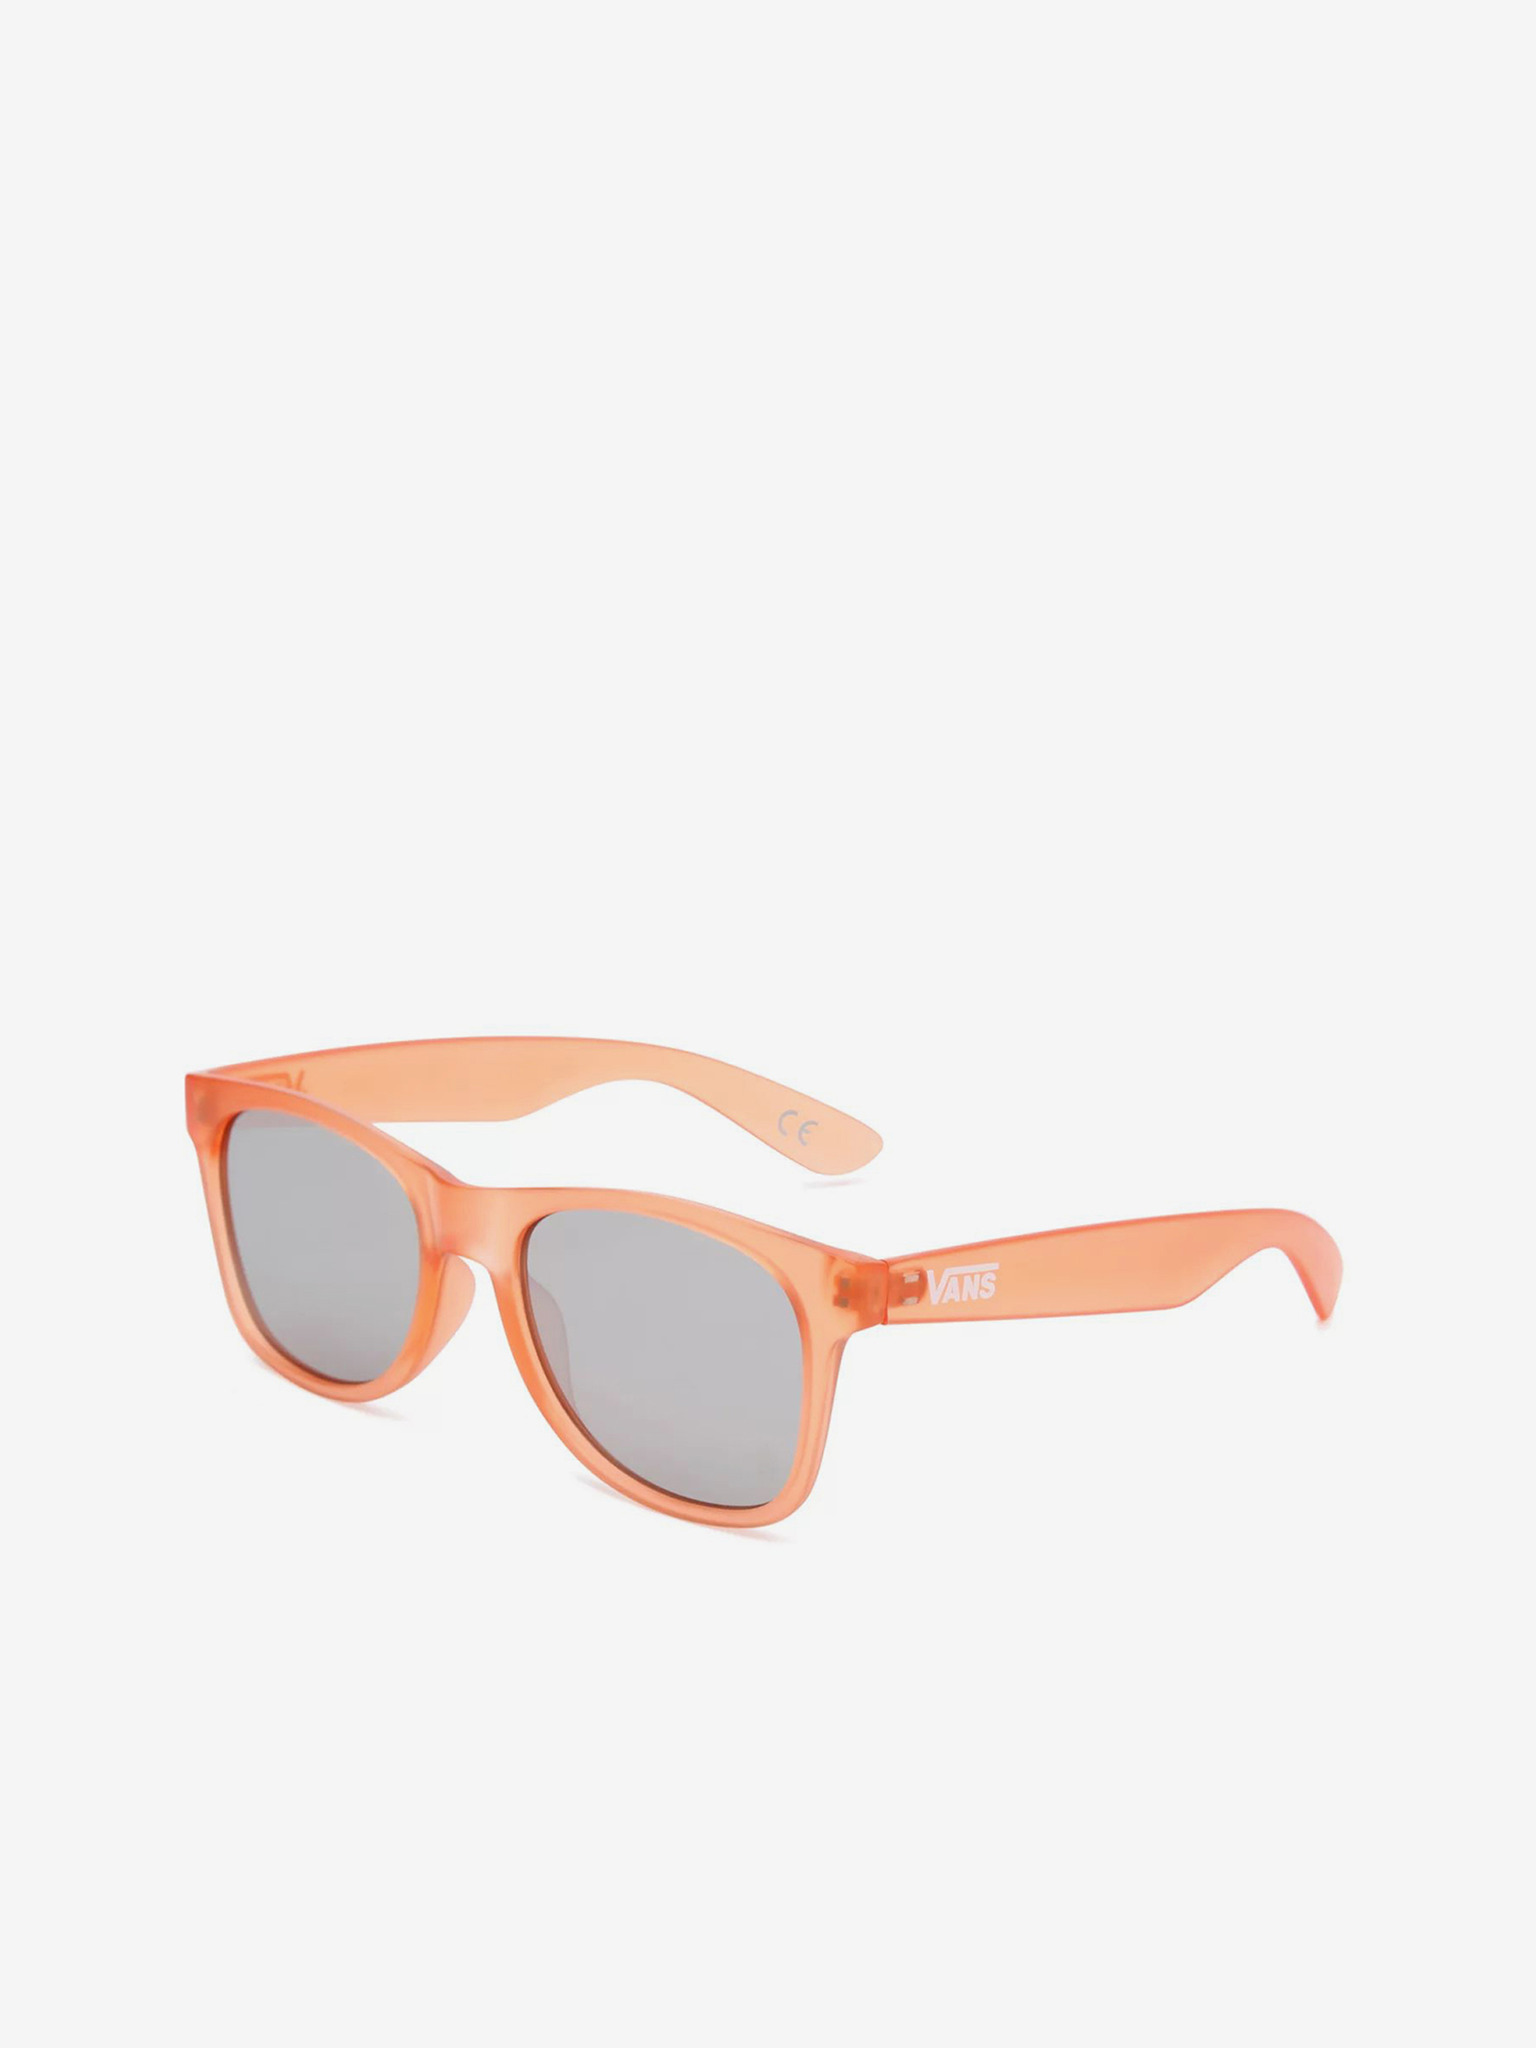 Vans - Spicoli Flat Shades Sunglasses